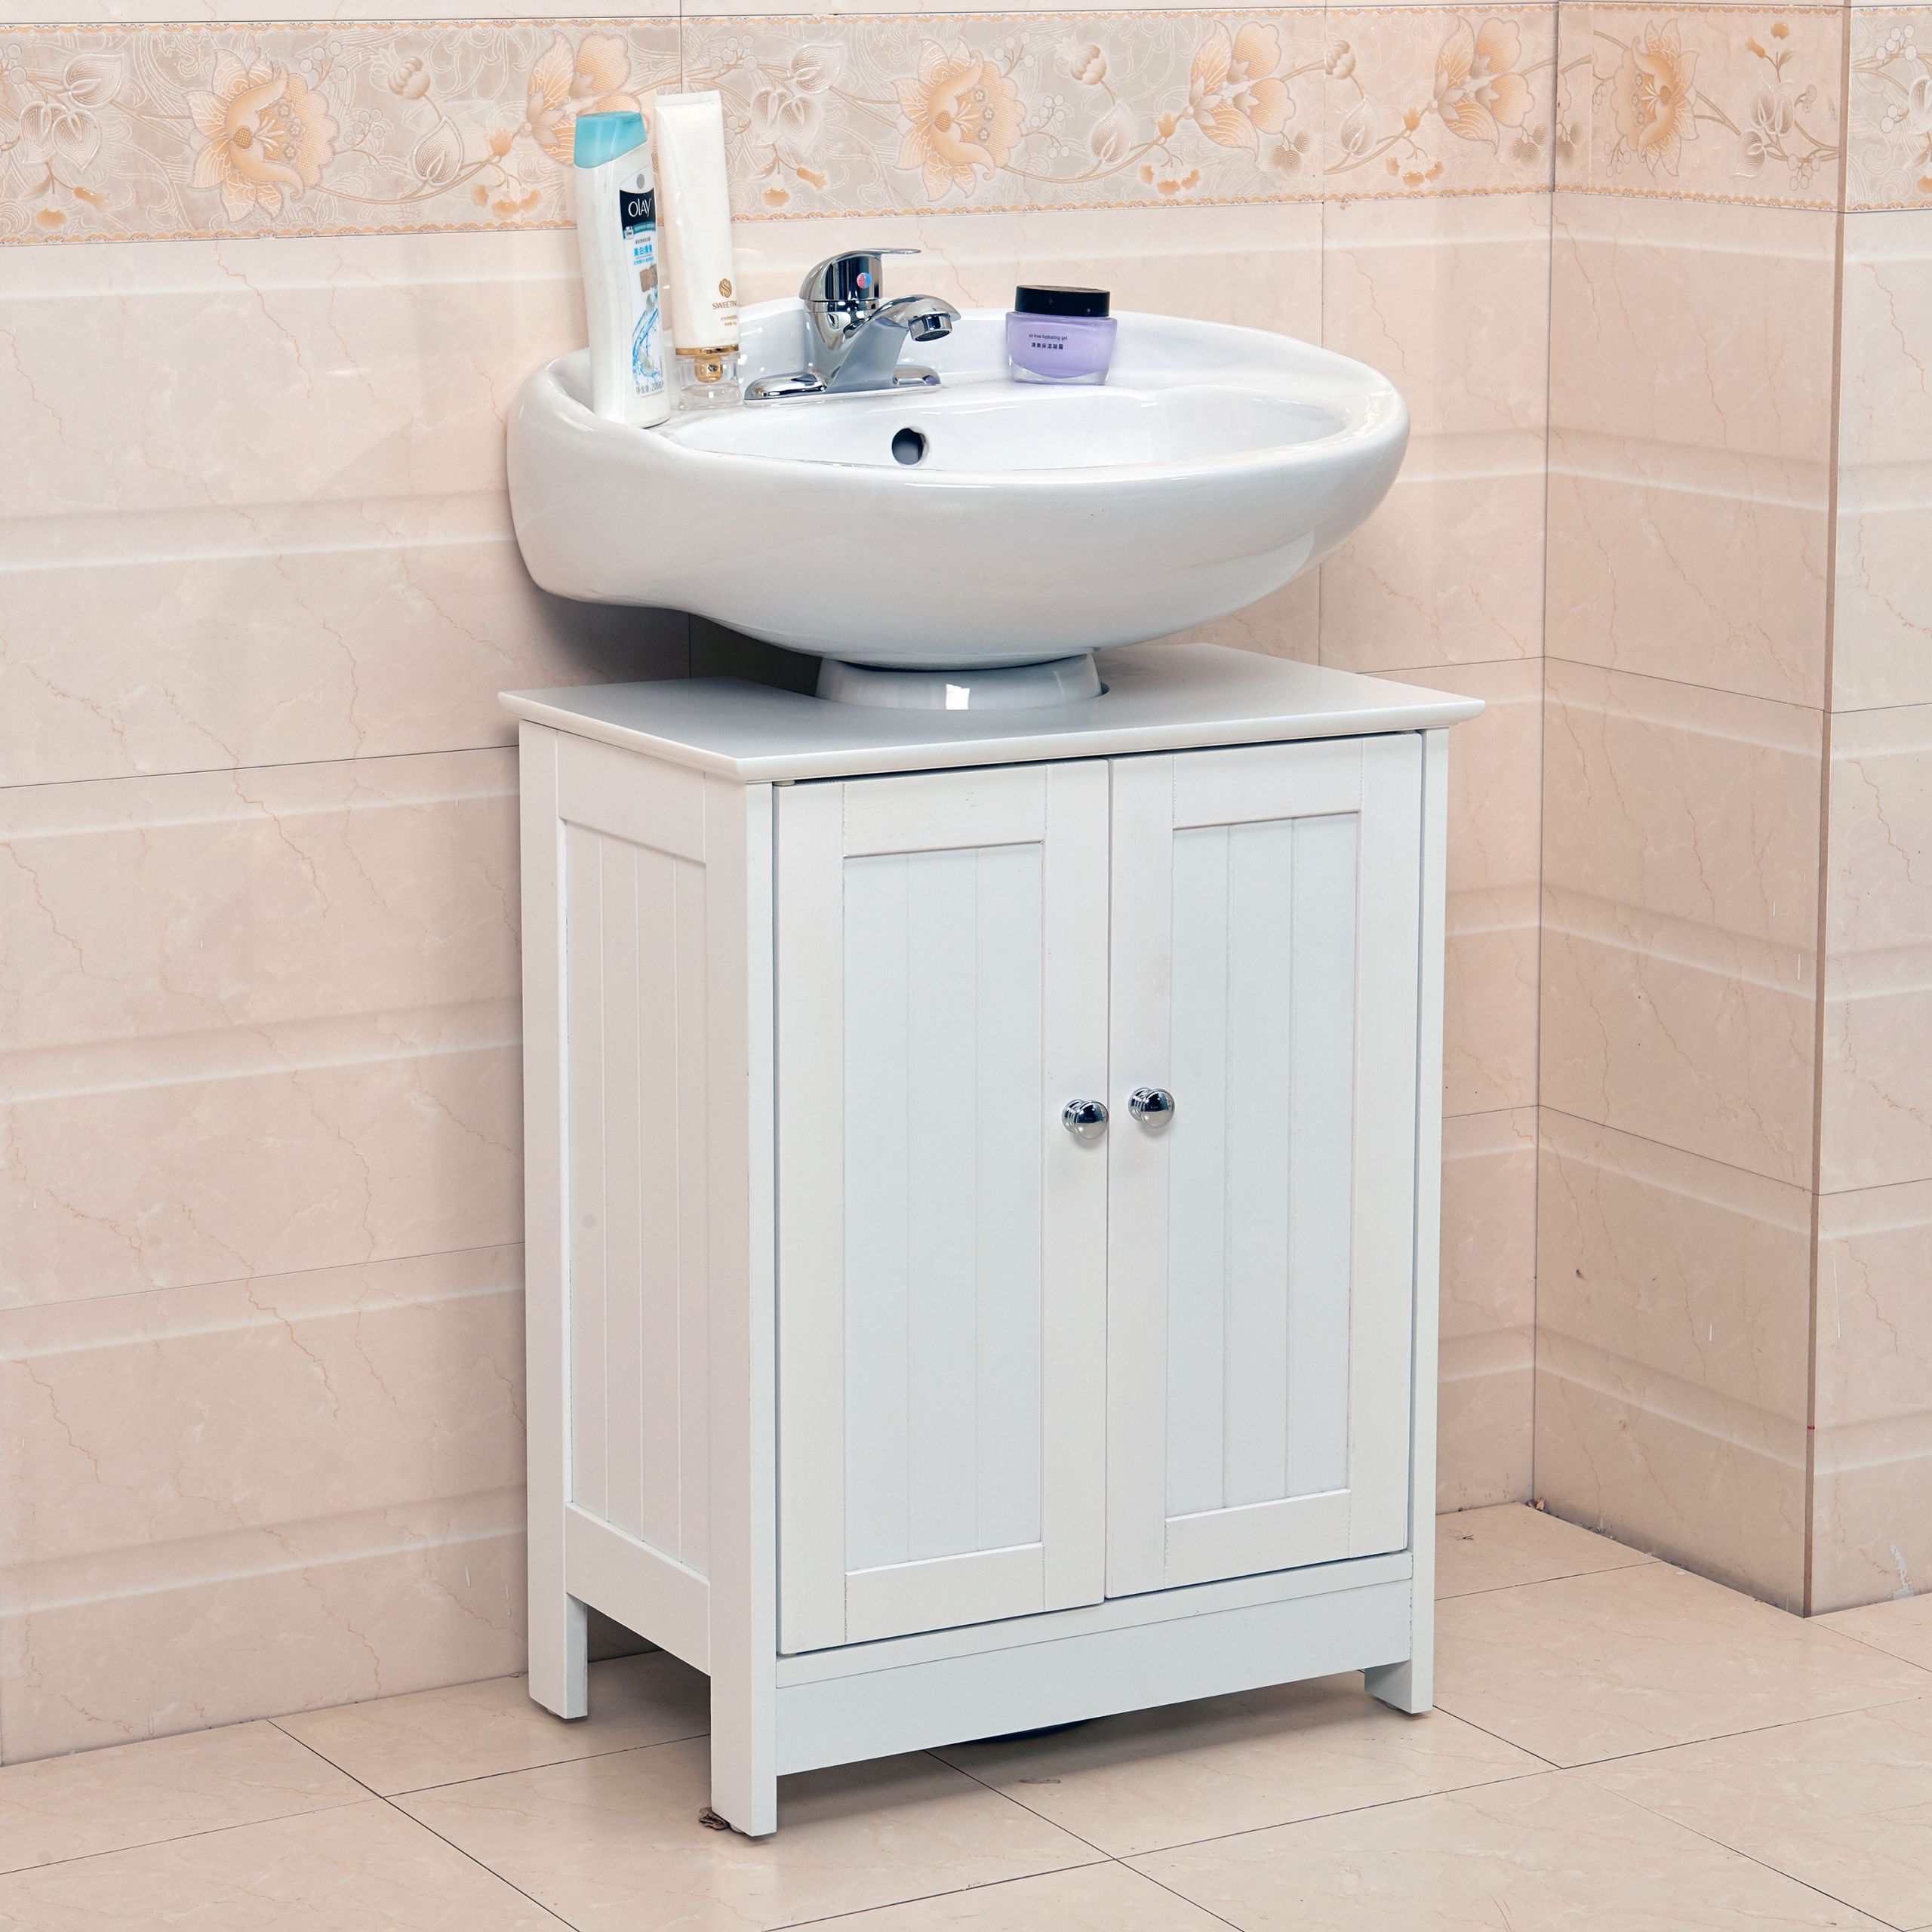 Bathroom Cabinets With Sink
 Undersink Bathroom Cabinet Cupboard Vanity Unit Under Sink